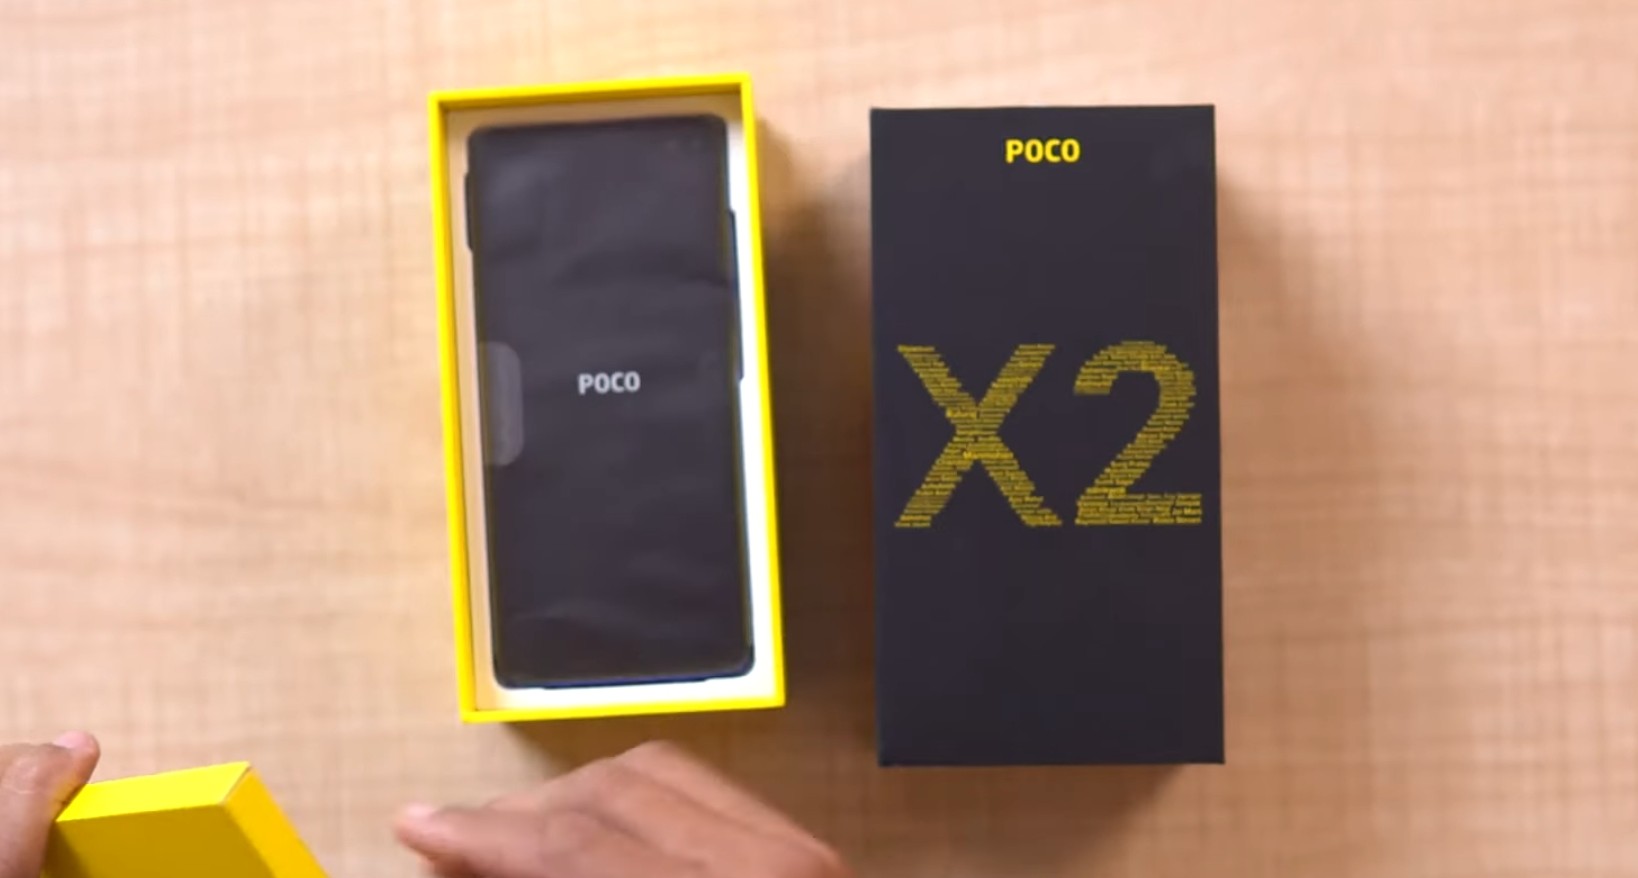 Xiaomi Poco M 2